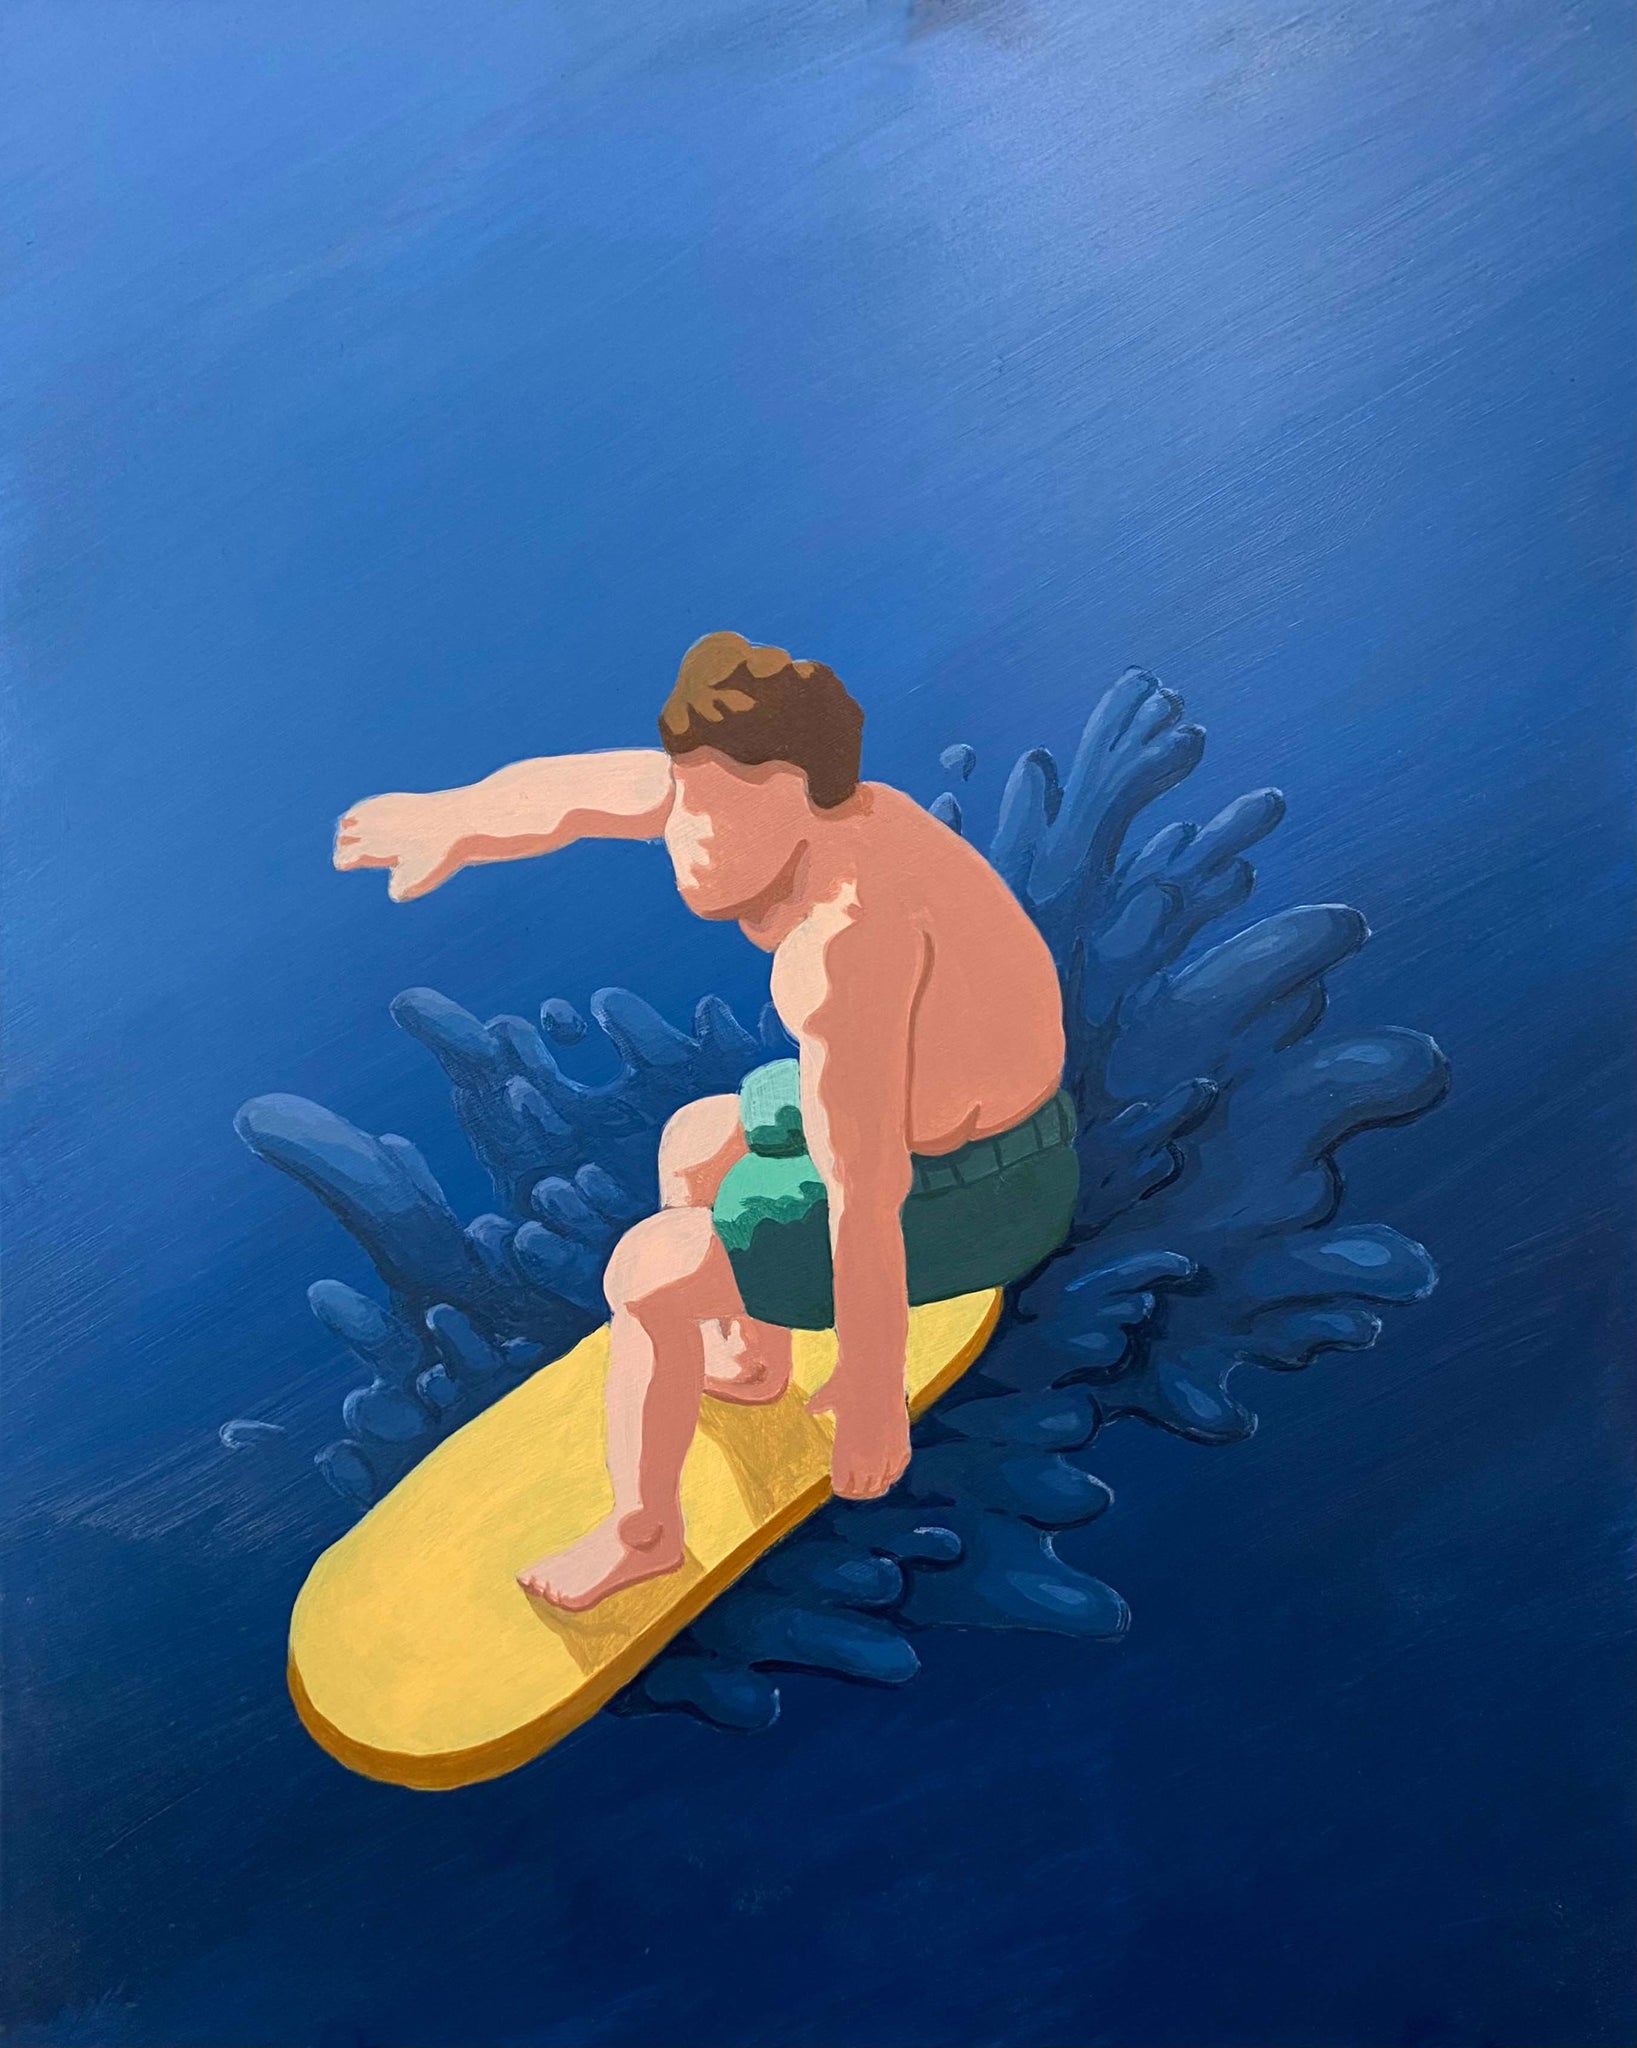 Michael MacDonald, "Surfer"